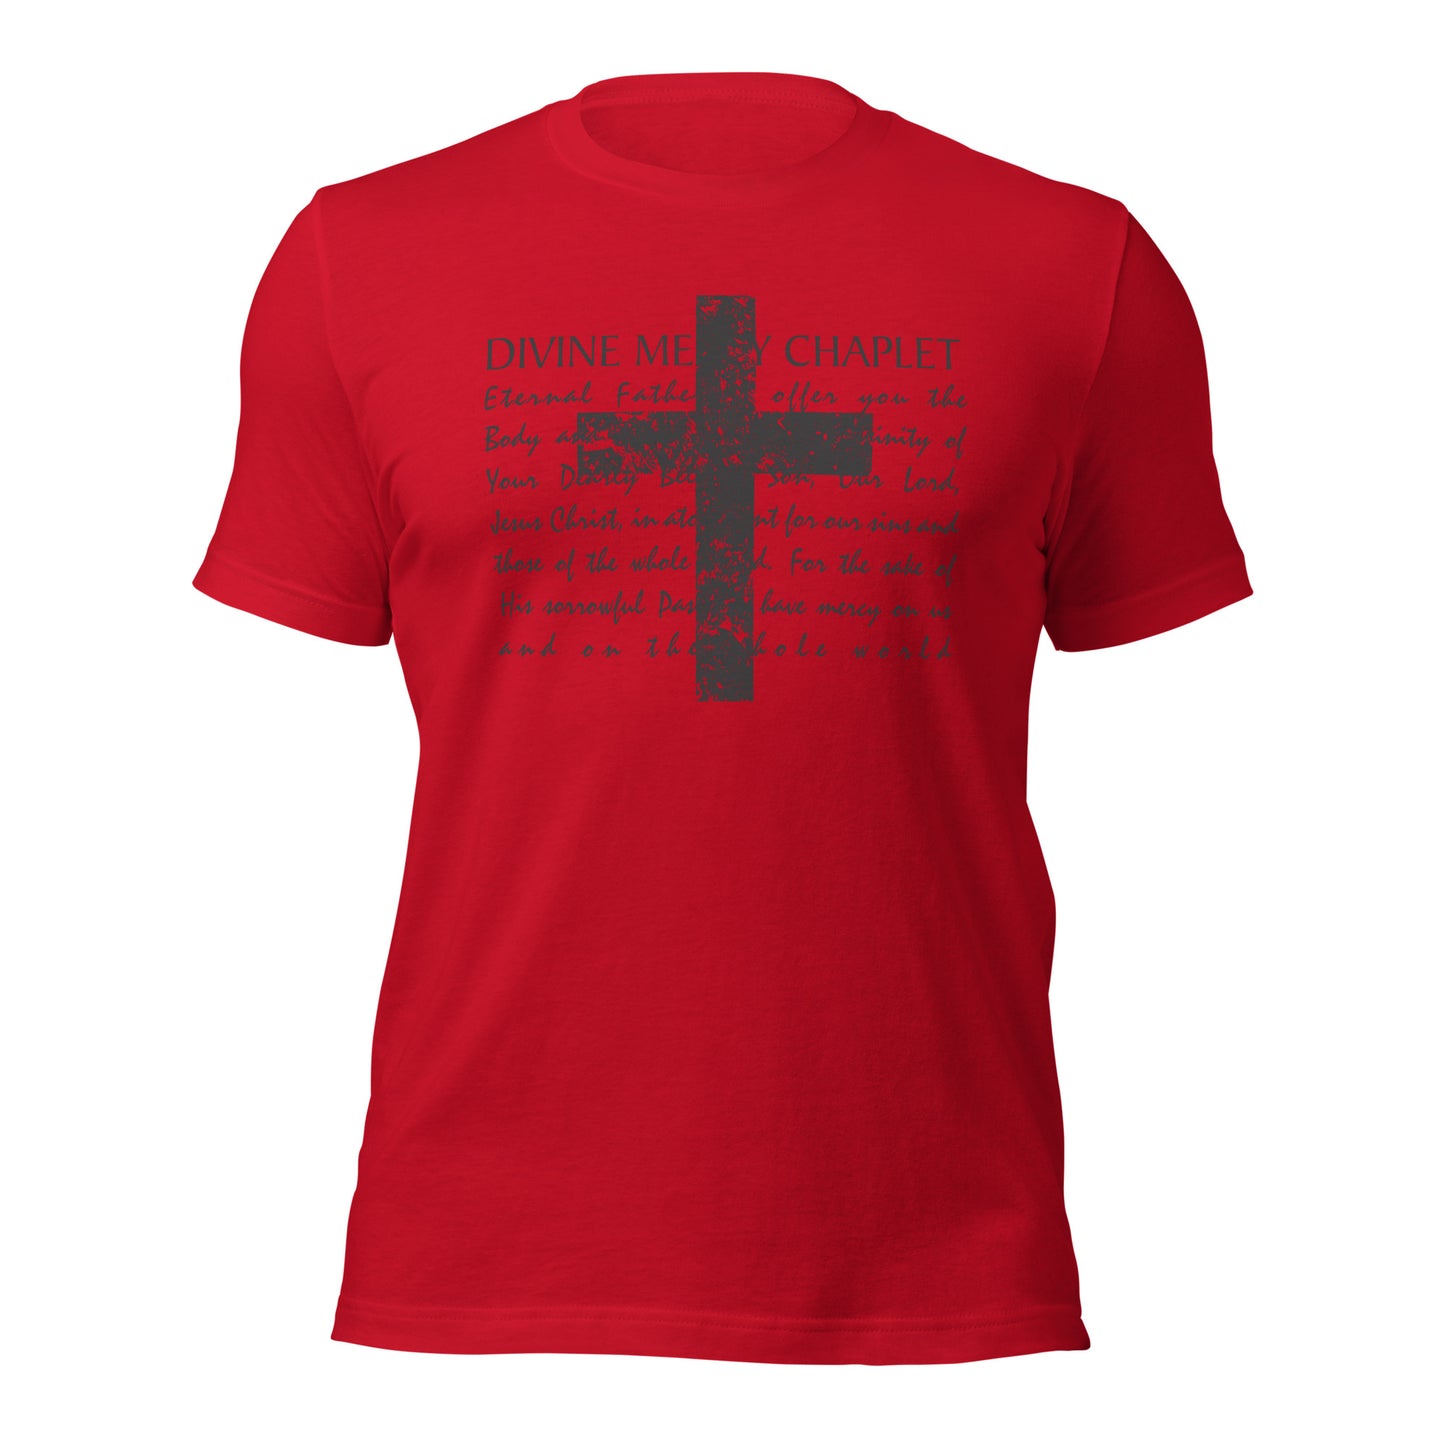 Divine Mercy Chaplet T-Shirt